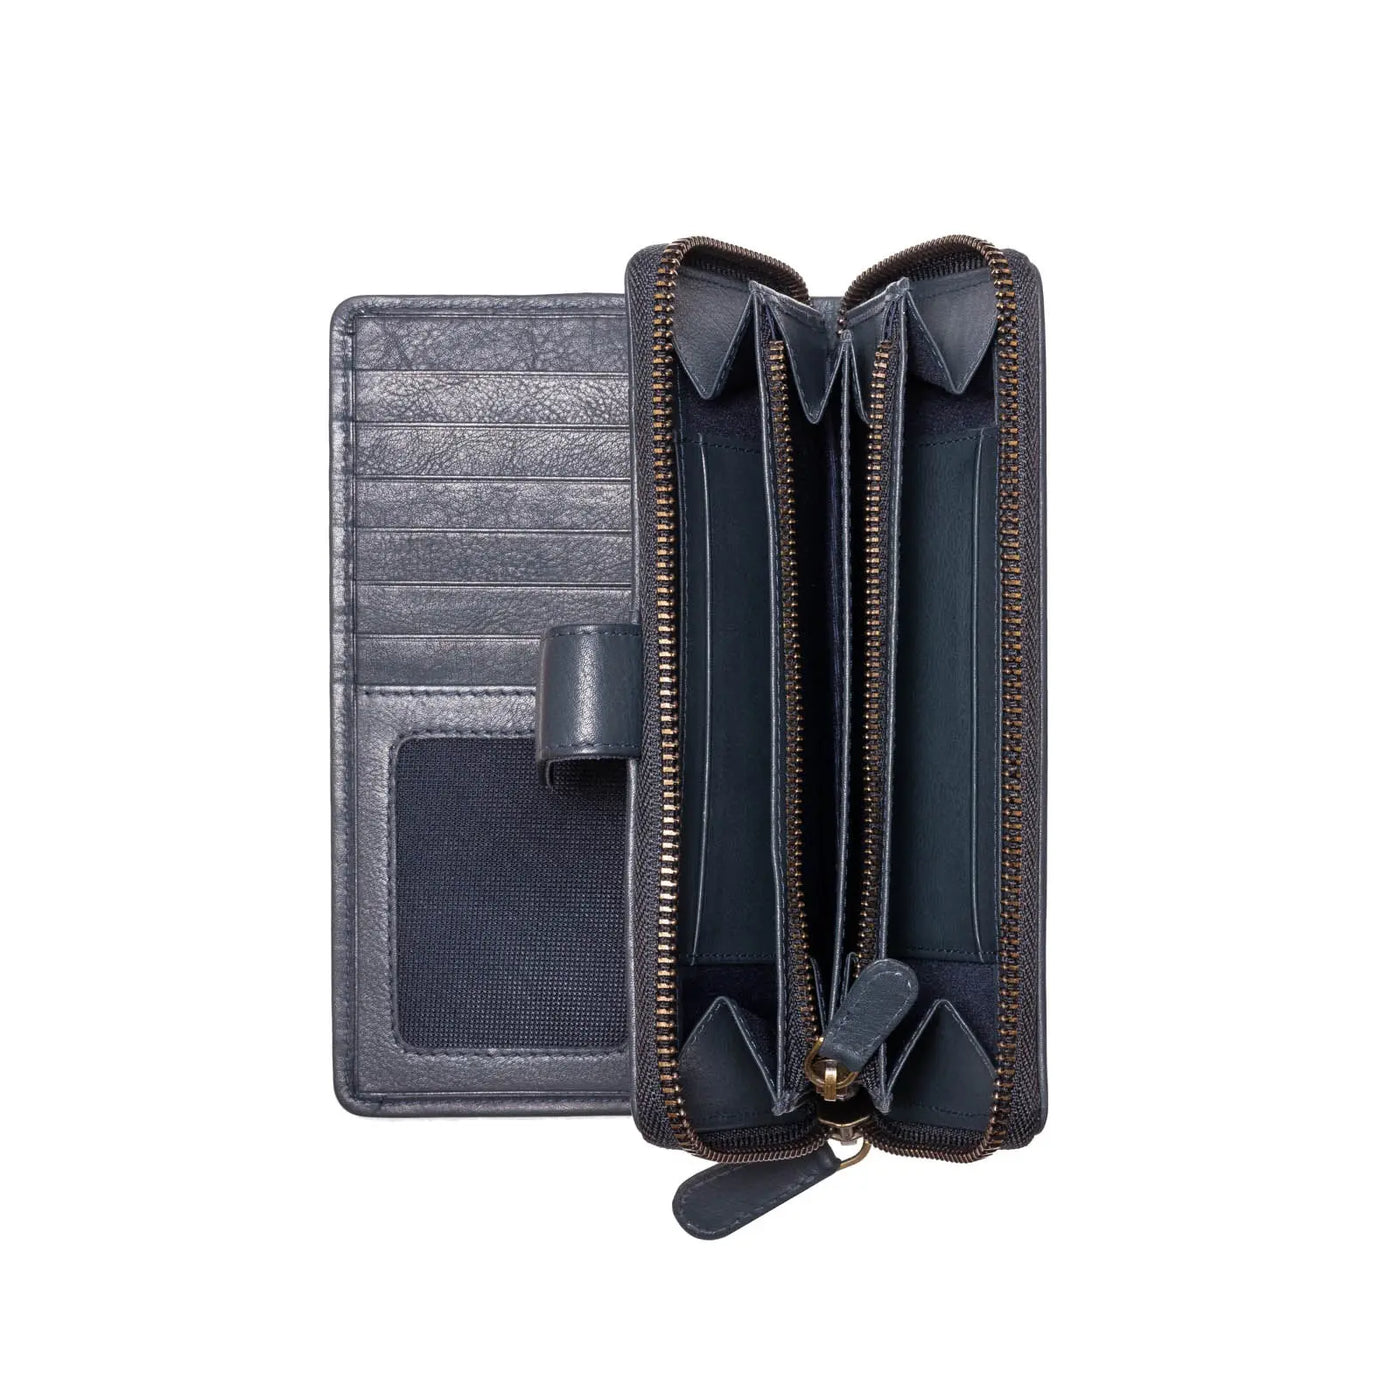 Stefanie supple leather wallet bi-color